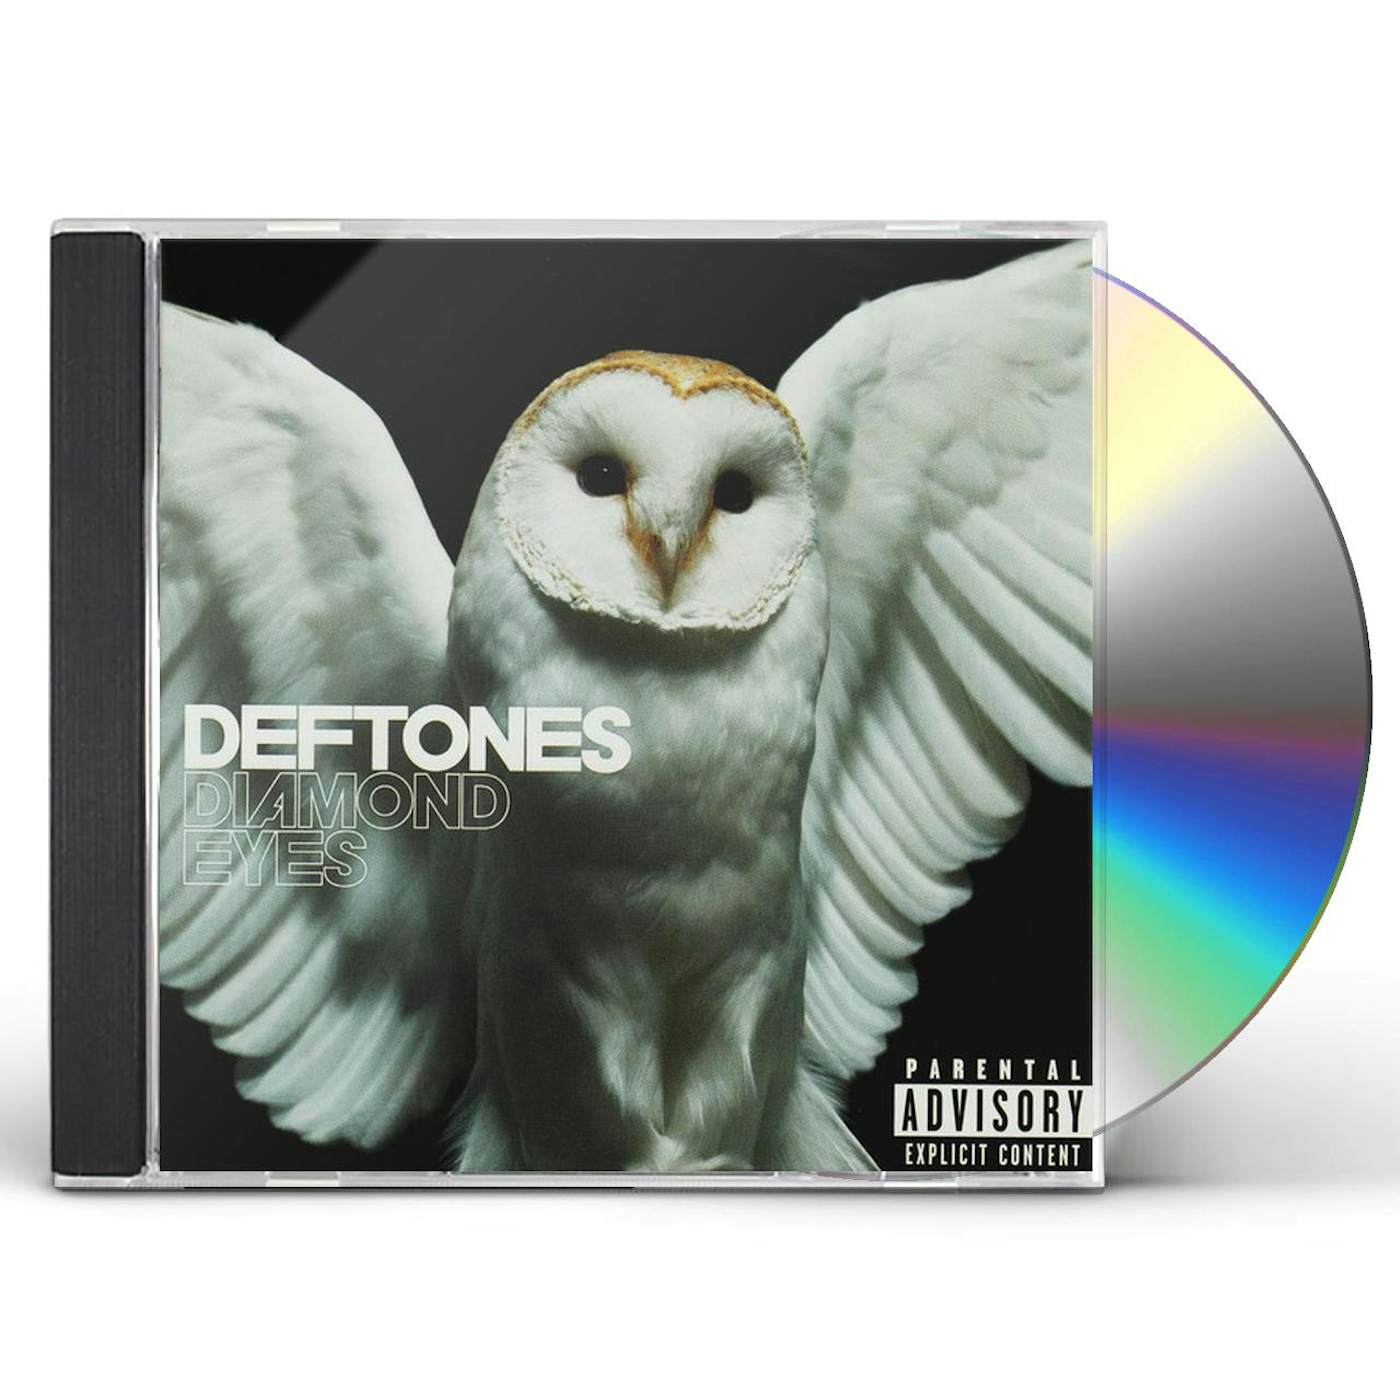 Deftones DIAMOND EYES CD $11.99$9.99